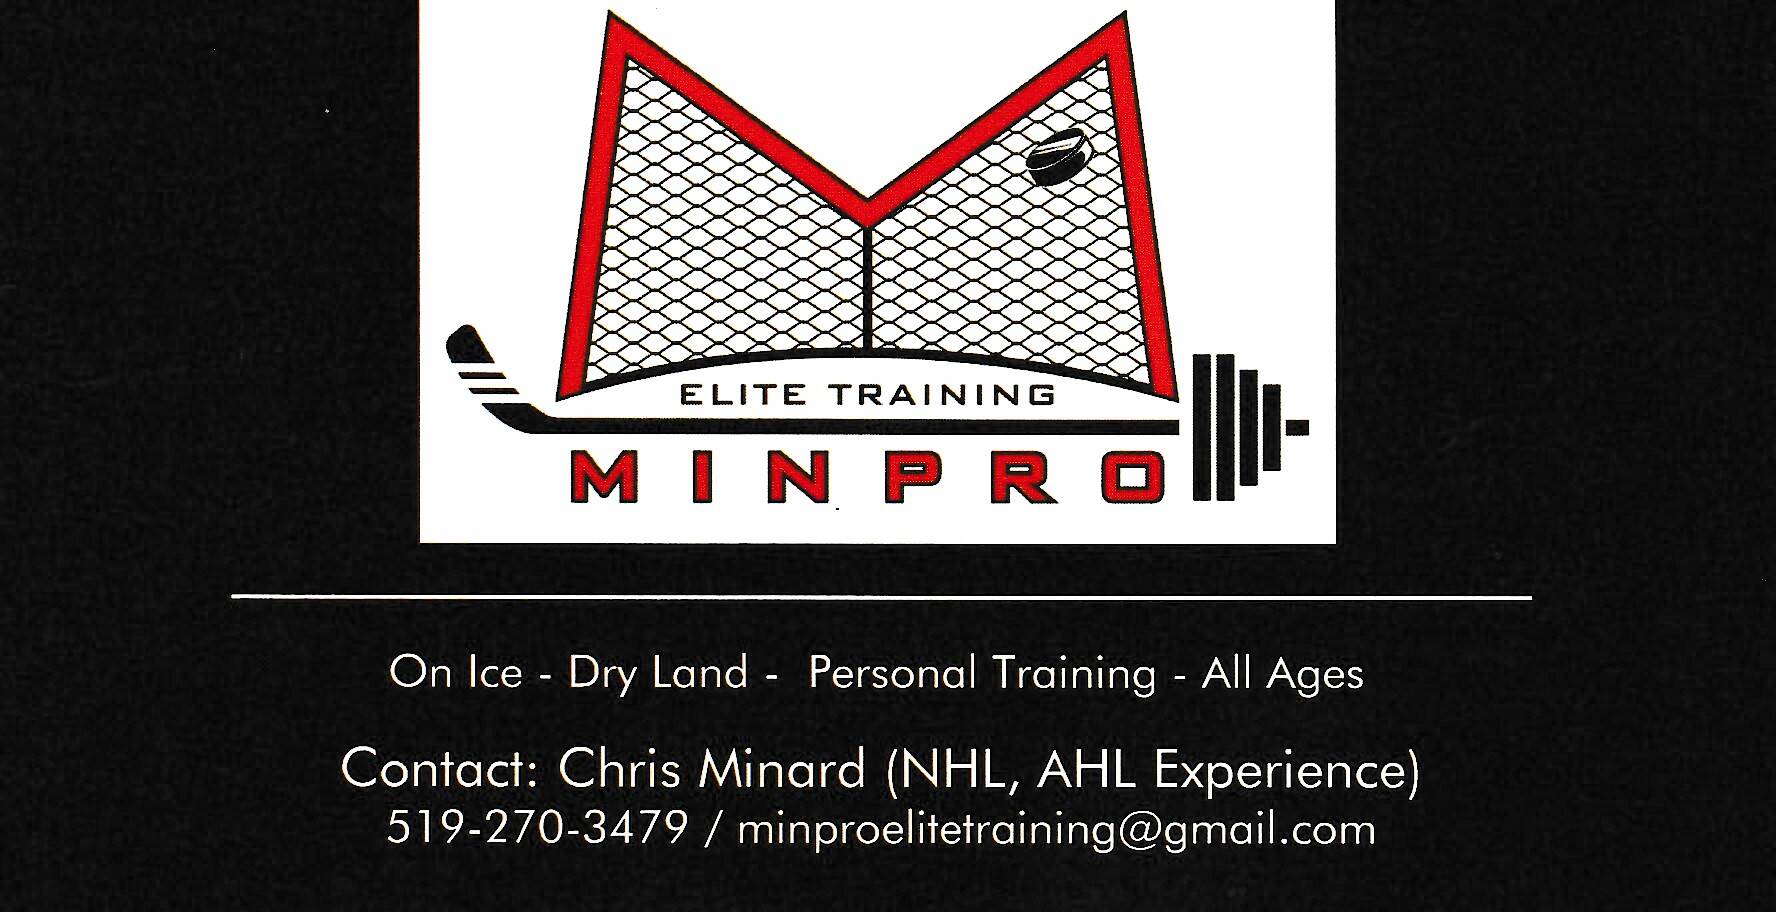 Minpro Elite Training